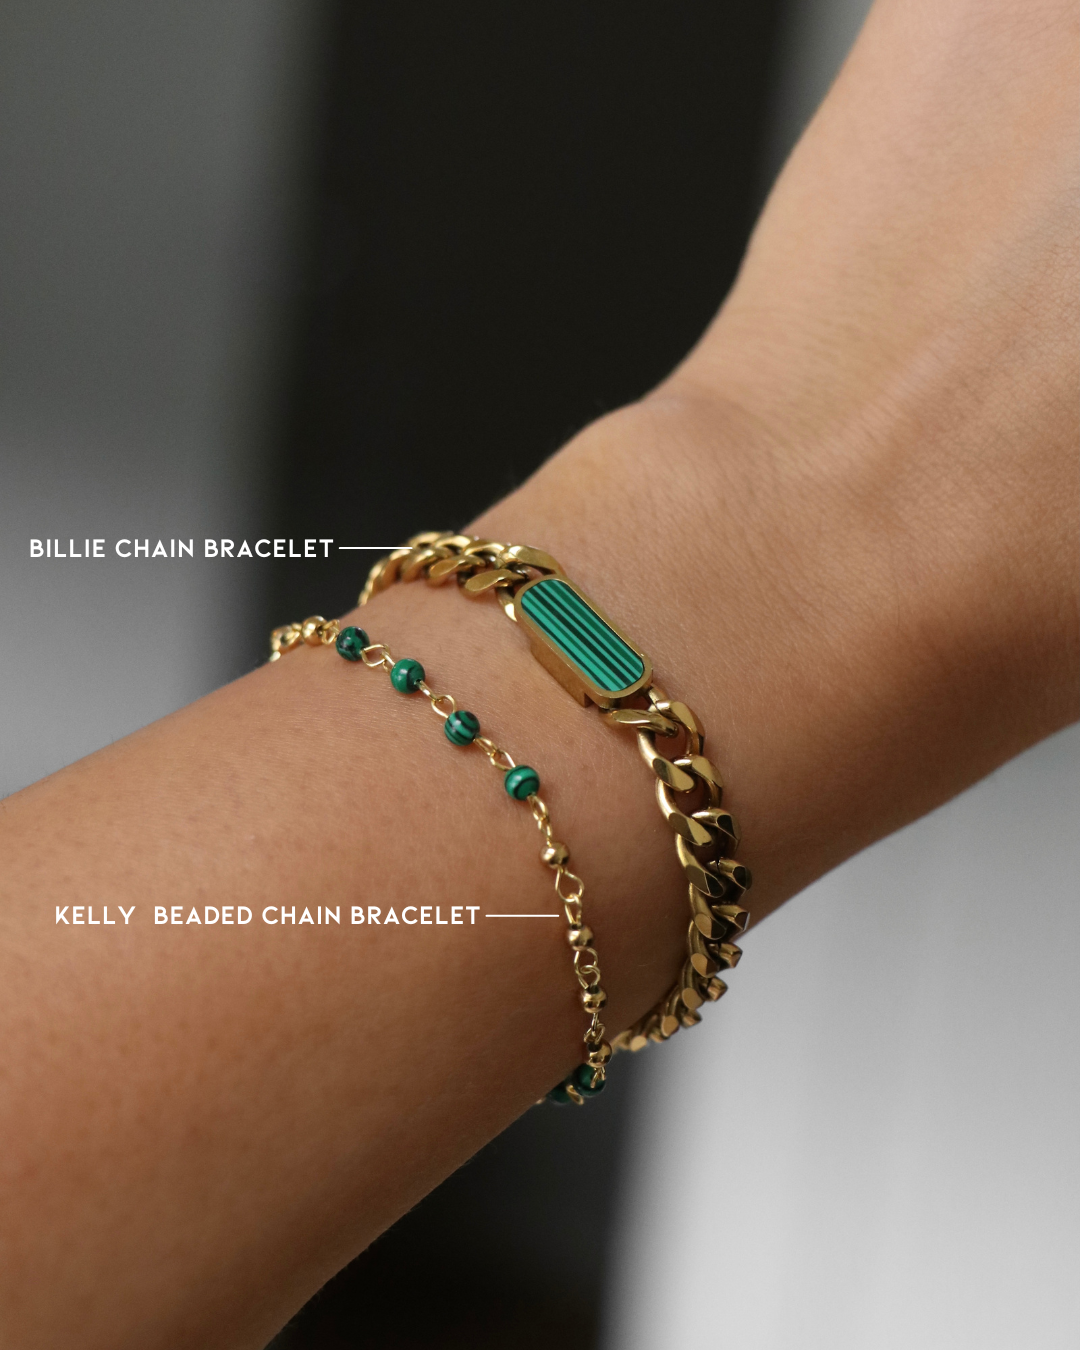 The Kelly Beaded Chain Bracelet